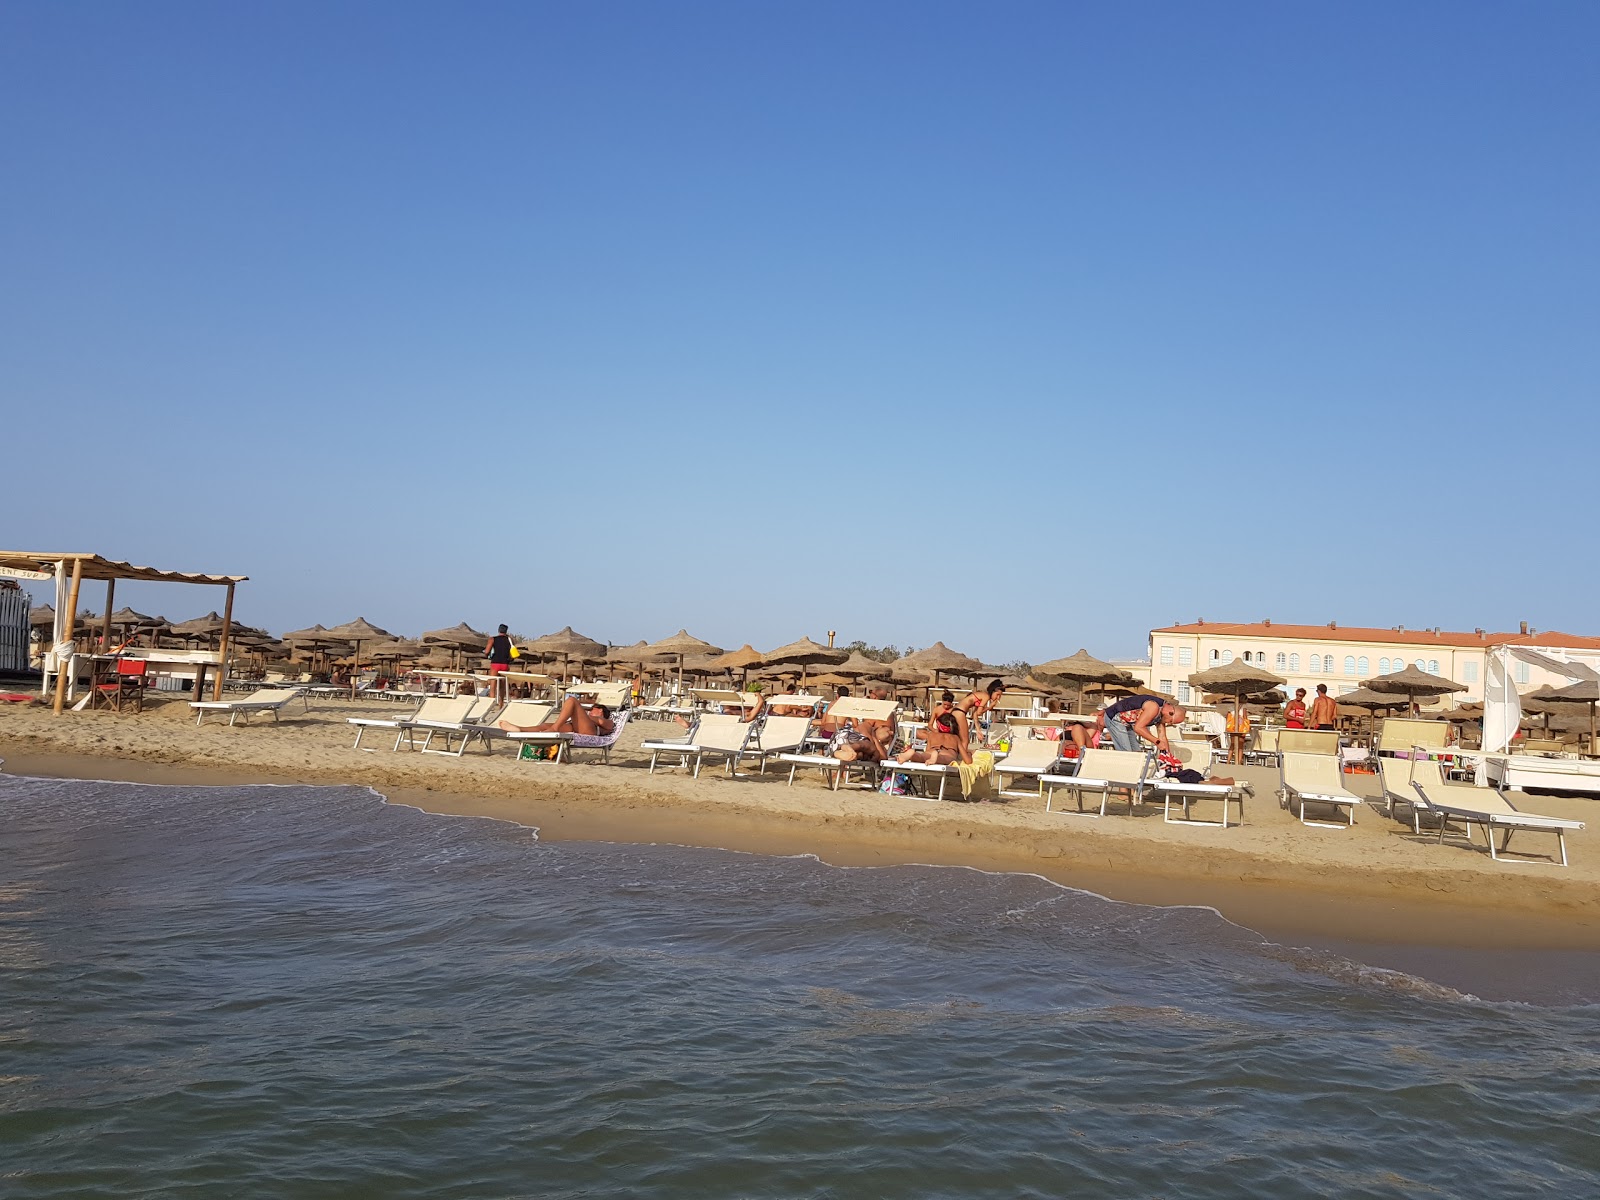 Photo of Spiaggia Libera Tirrenia and the settlement